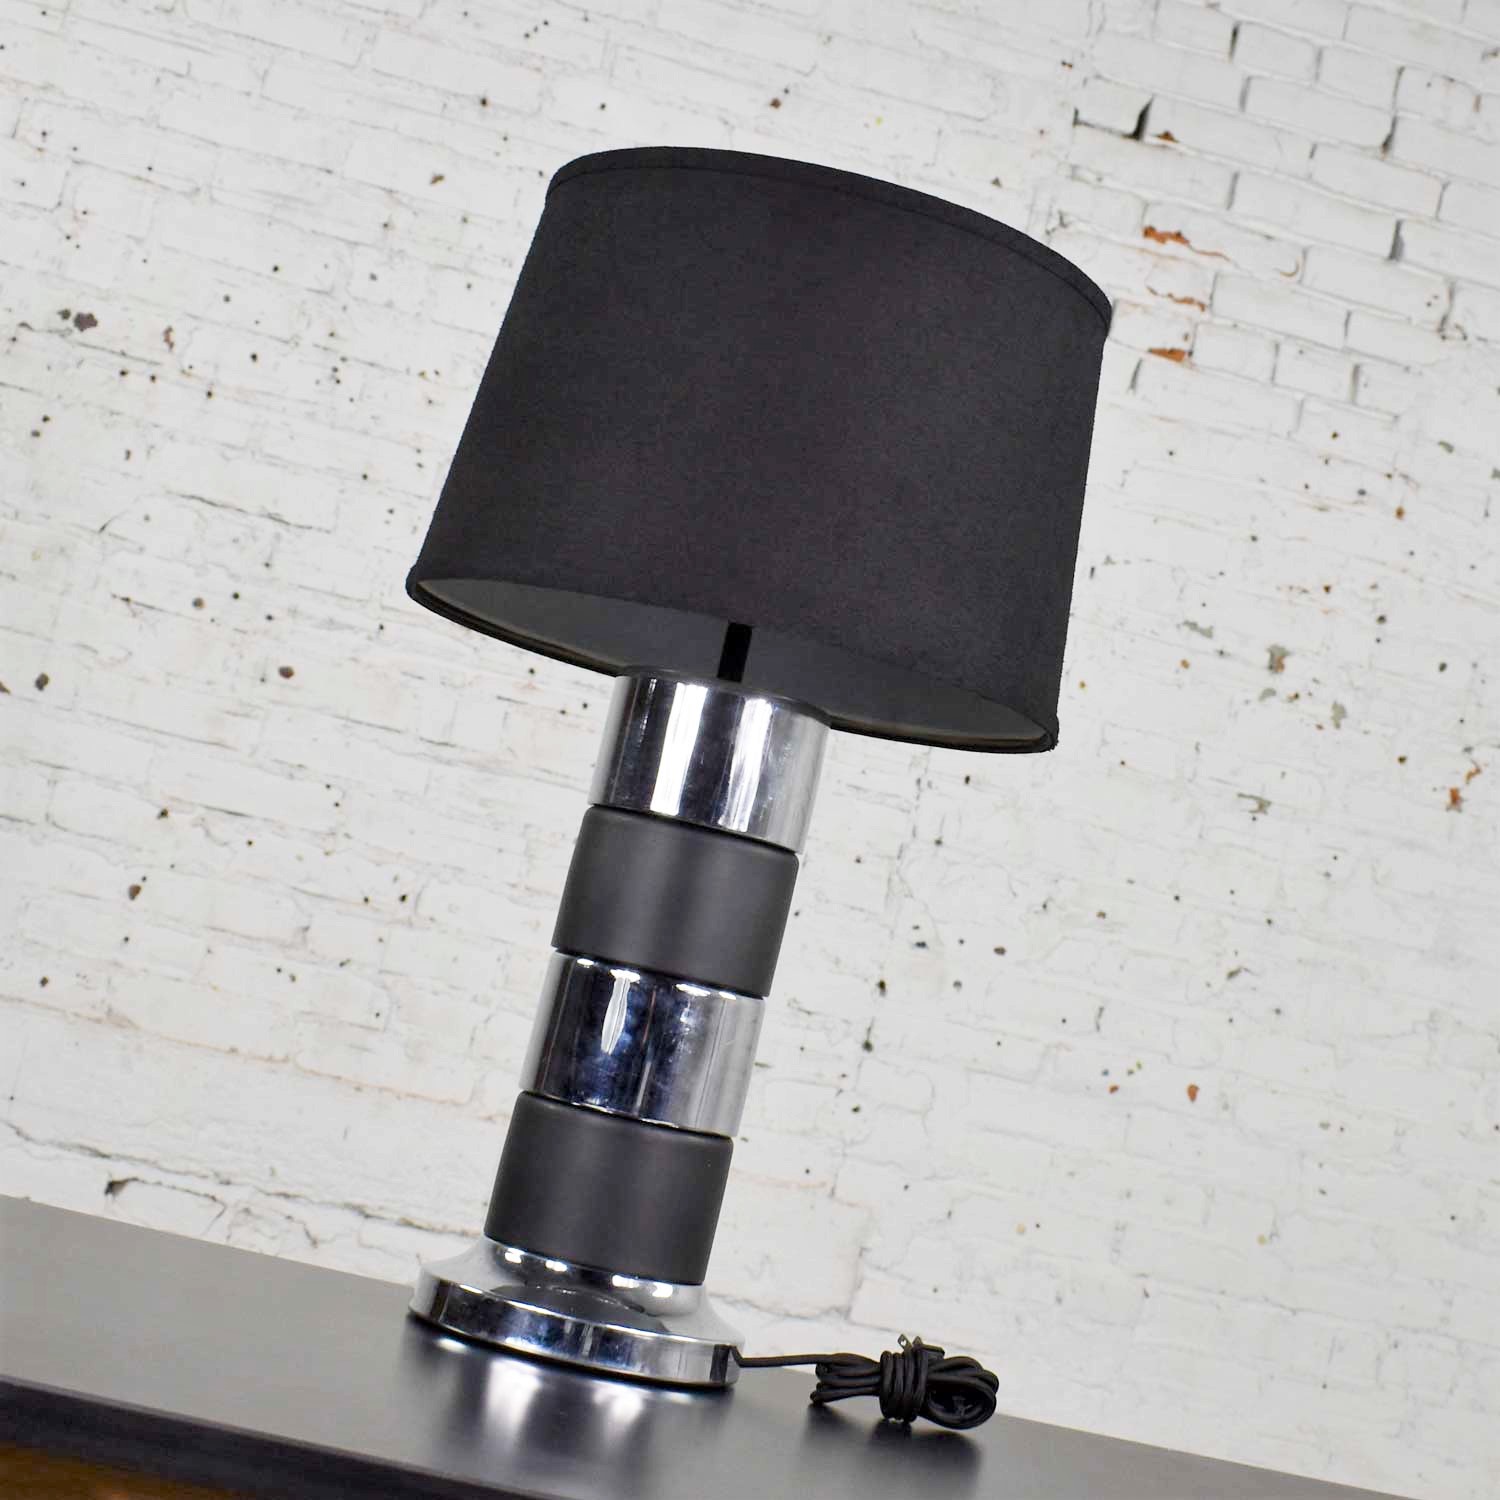 Art Deco Style Chrome and Black Horizontal Stripe Cylindrical Table Lamp Black Shade